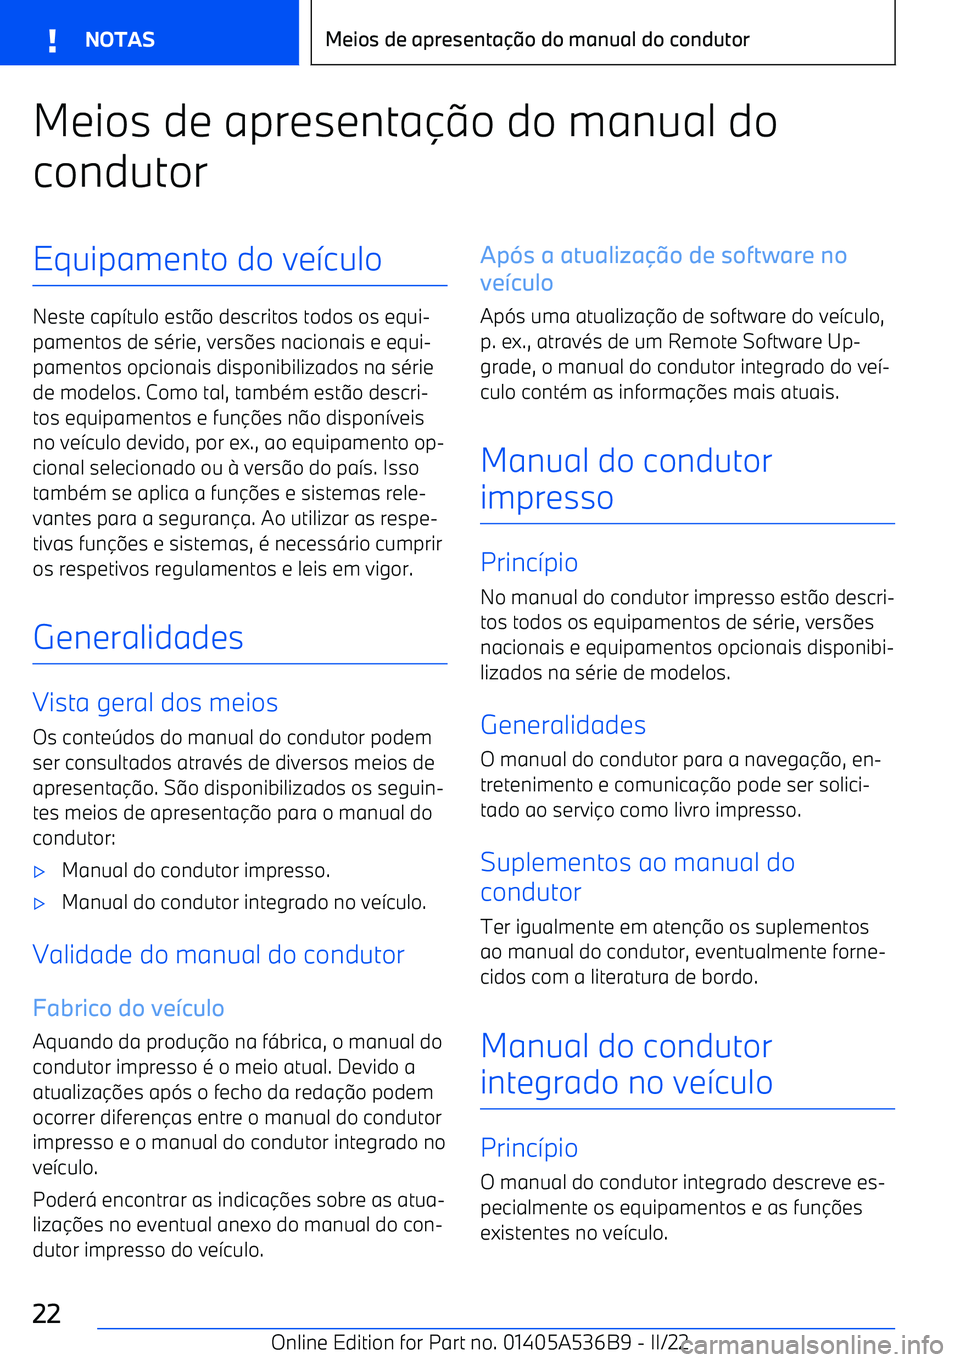 BMW X6 M 2022  Manual do condutor (in Portuguese) Meios de apresenta